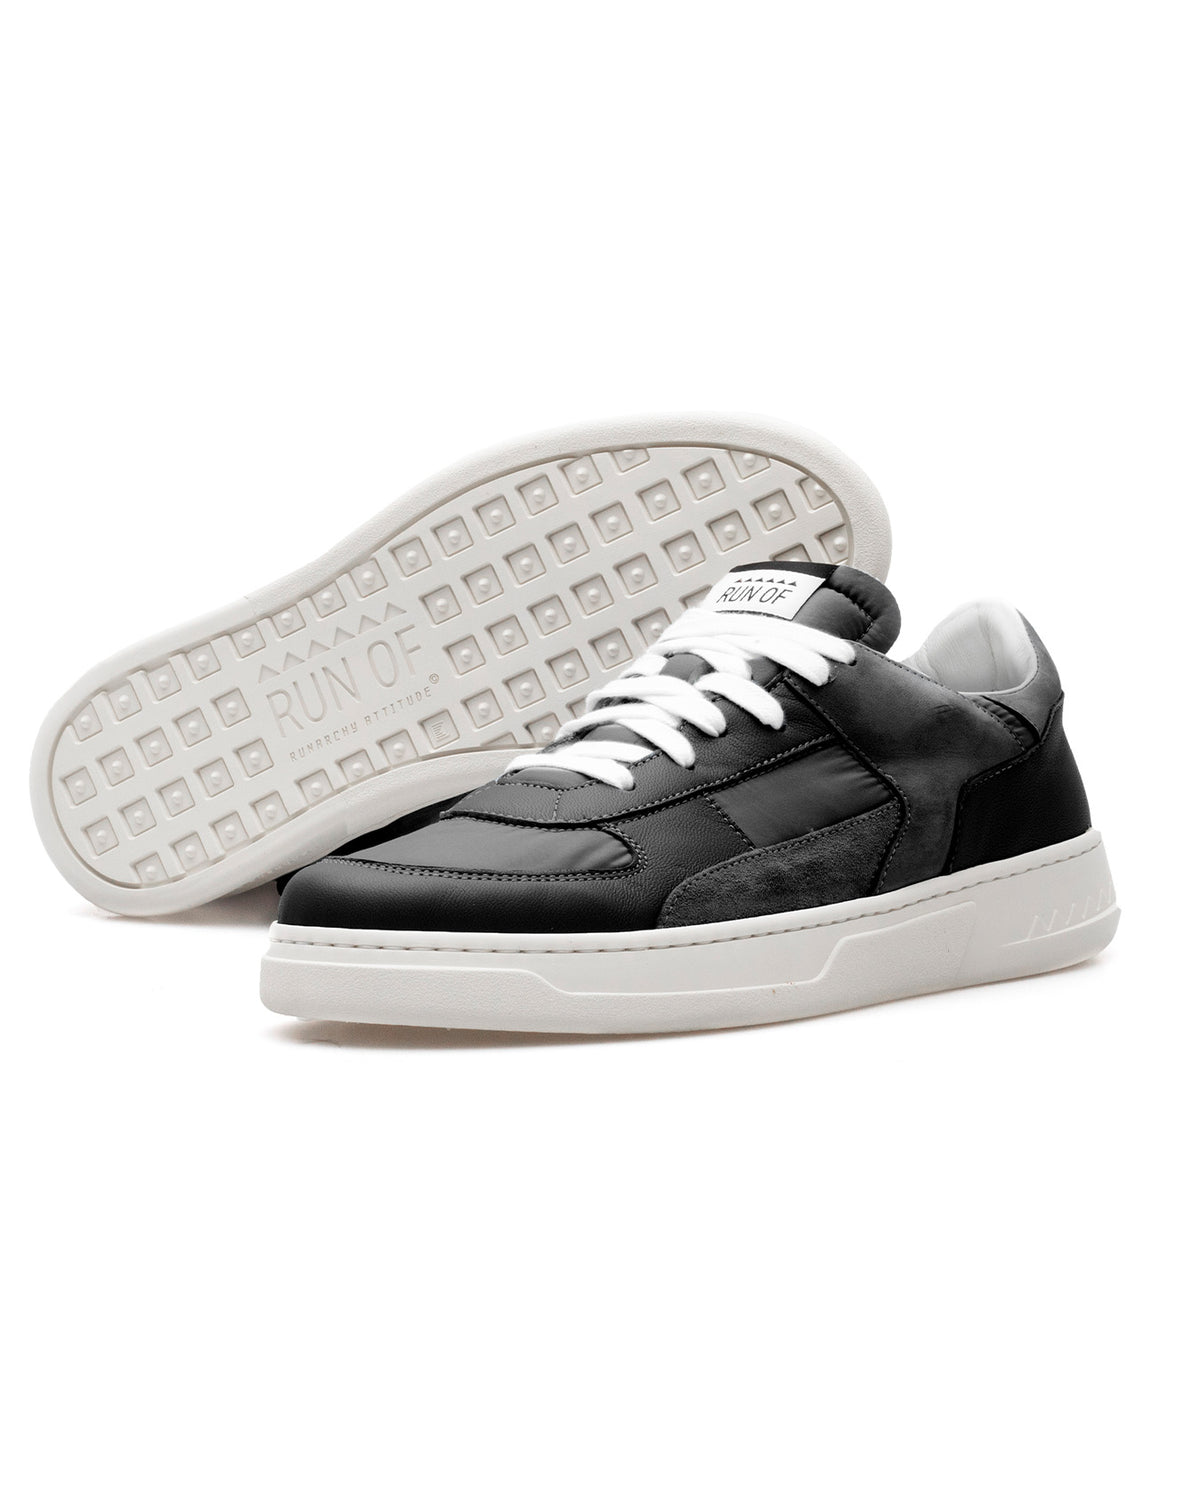 Errant Soft Low Top Sneaker - Black